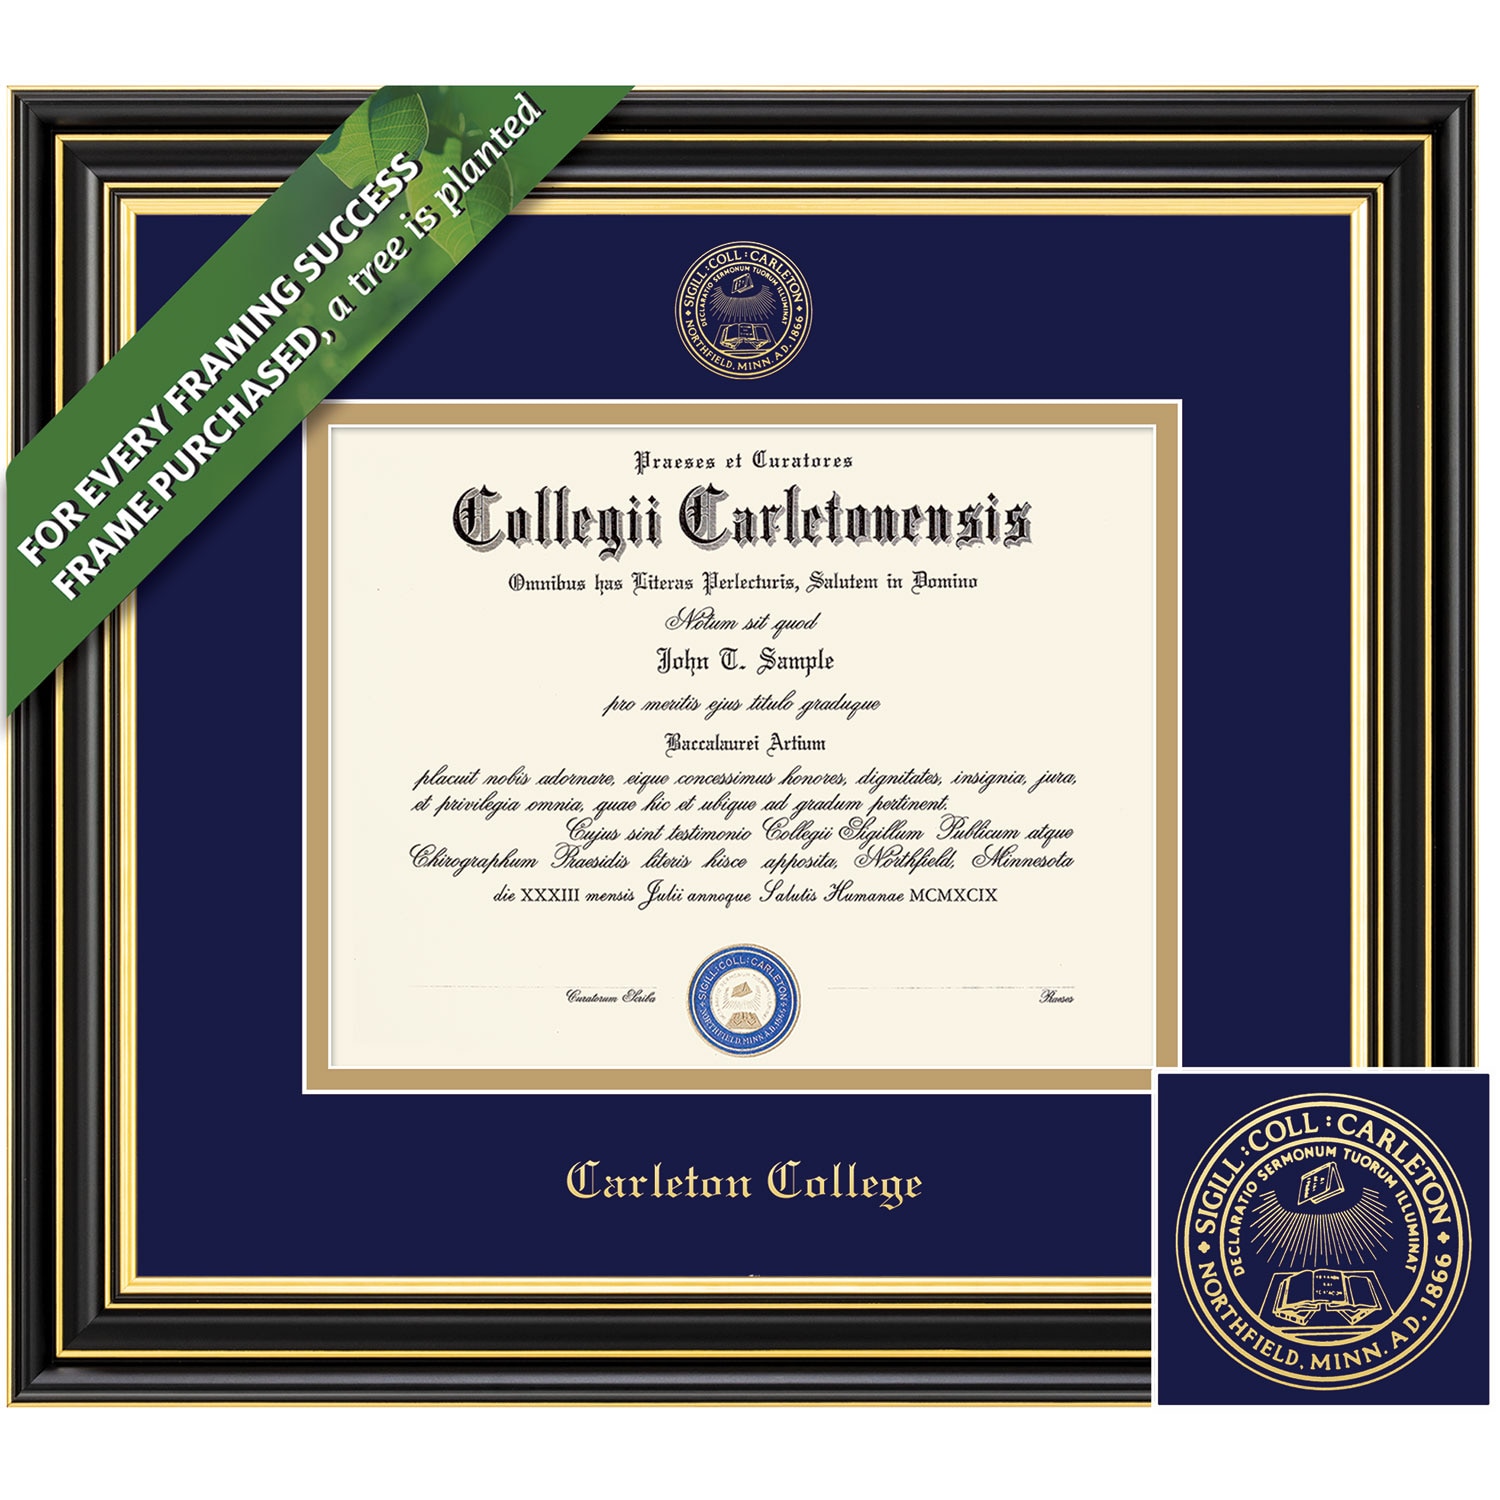 Framing Success 8.5 x 11 Prestige Gold Embossed School Seal Bachelors Diploma Frame